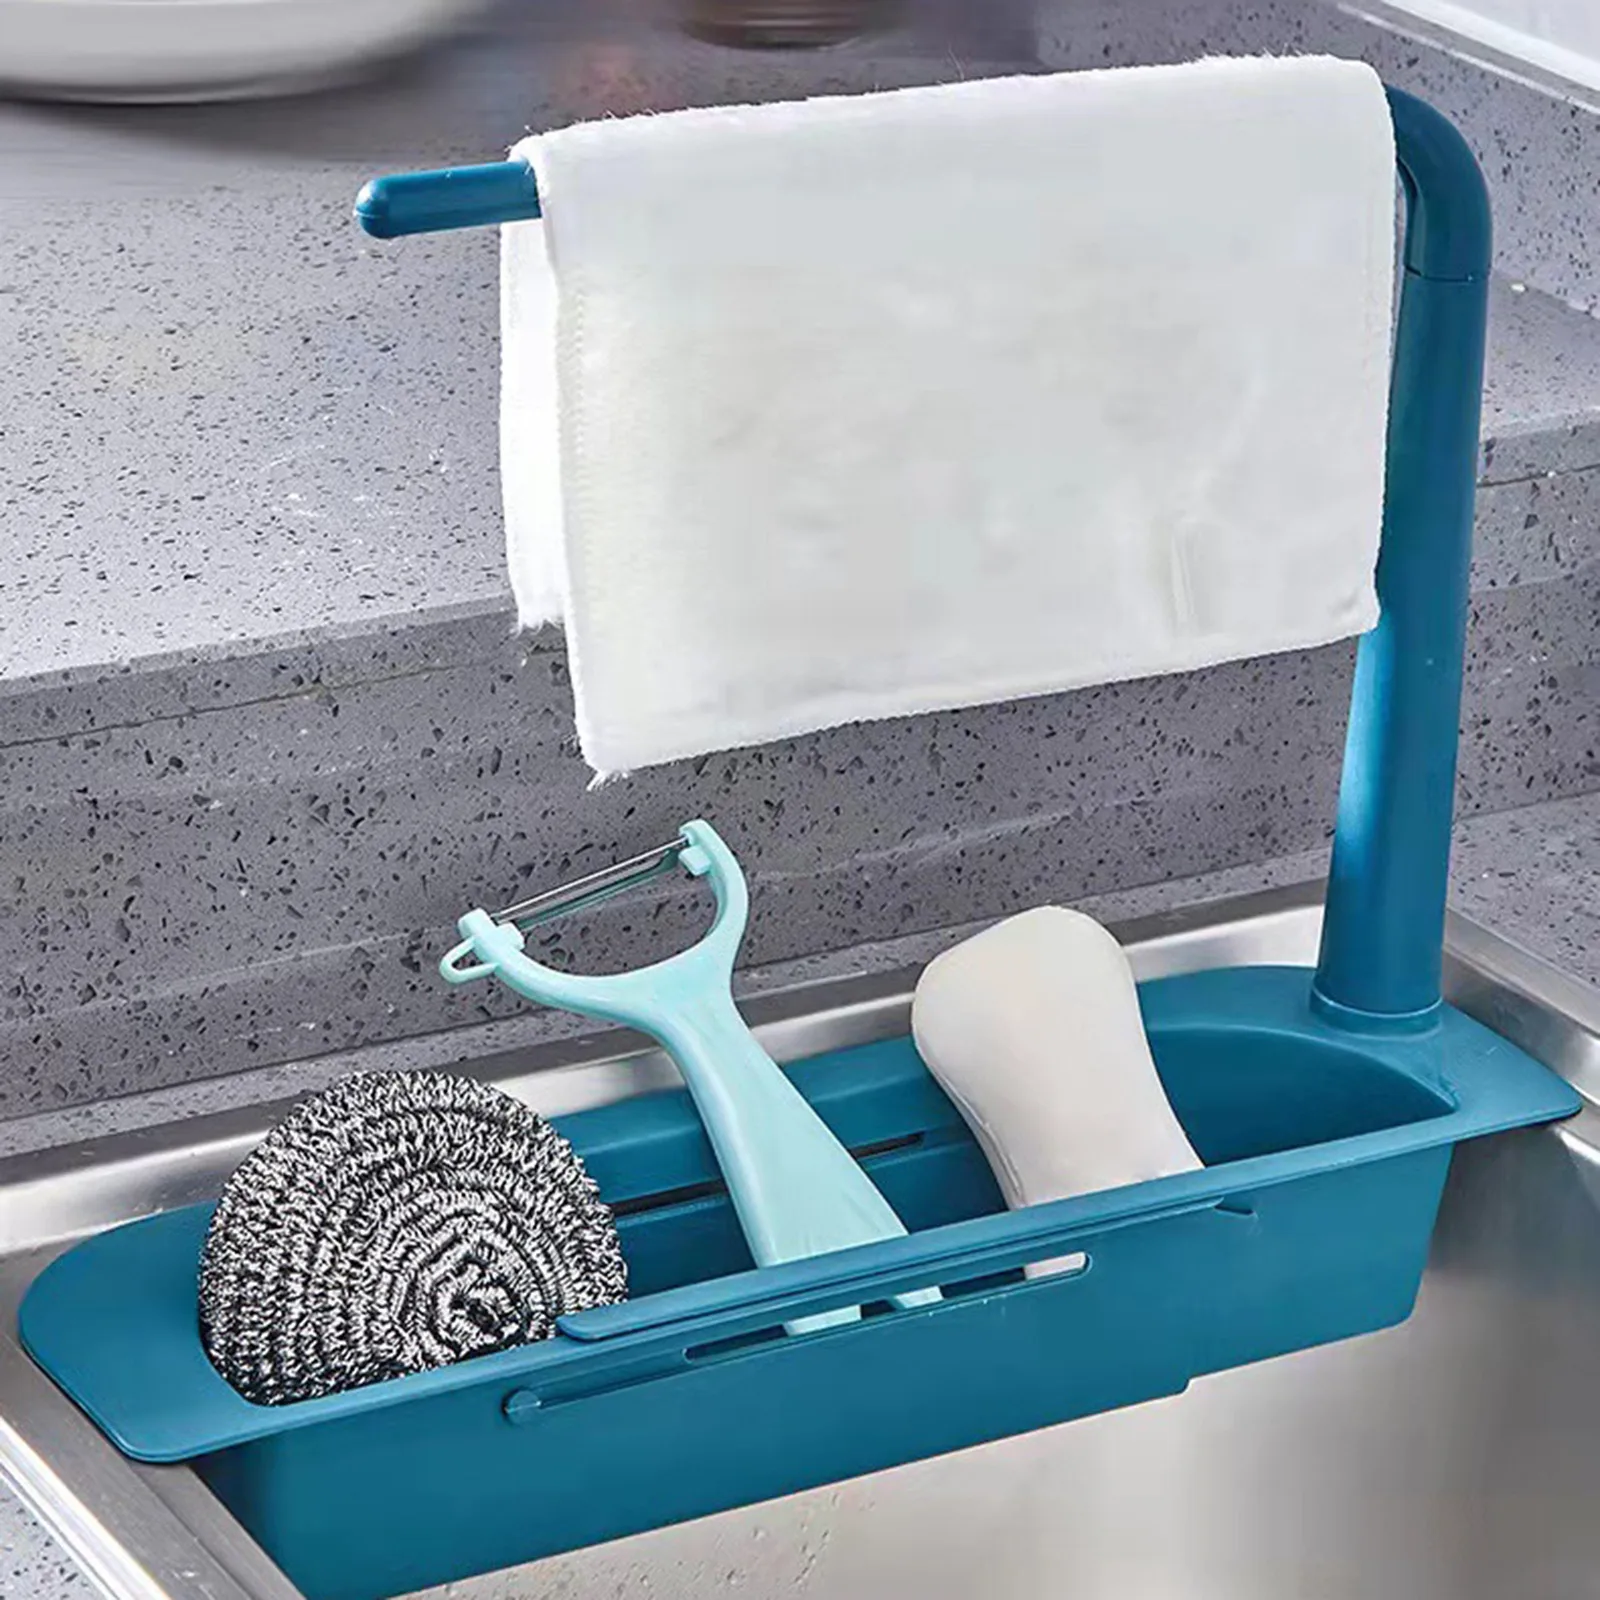 Купи Telescopic Rack Shelf Kitchen Sink Organizer Soap Sponge Holder Sink Drain Racks Storage Basket Kitchen Gadgets Accessories Tool за 100 рублей в магазине AliExpress